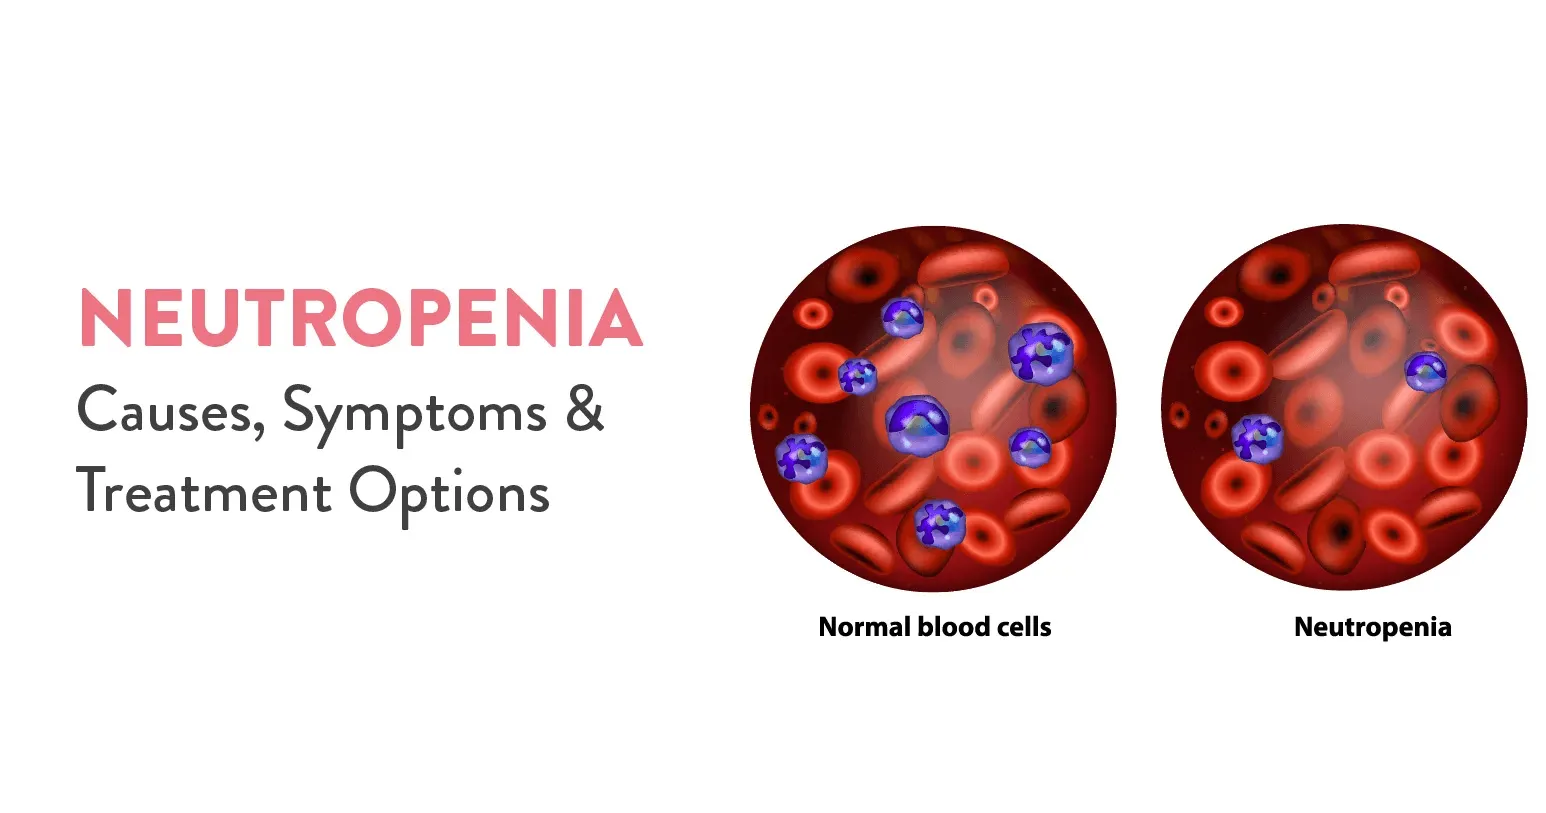 Neutropenia causes